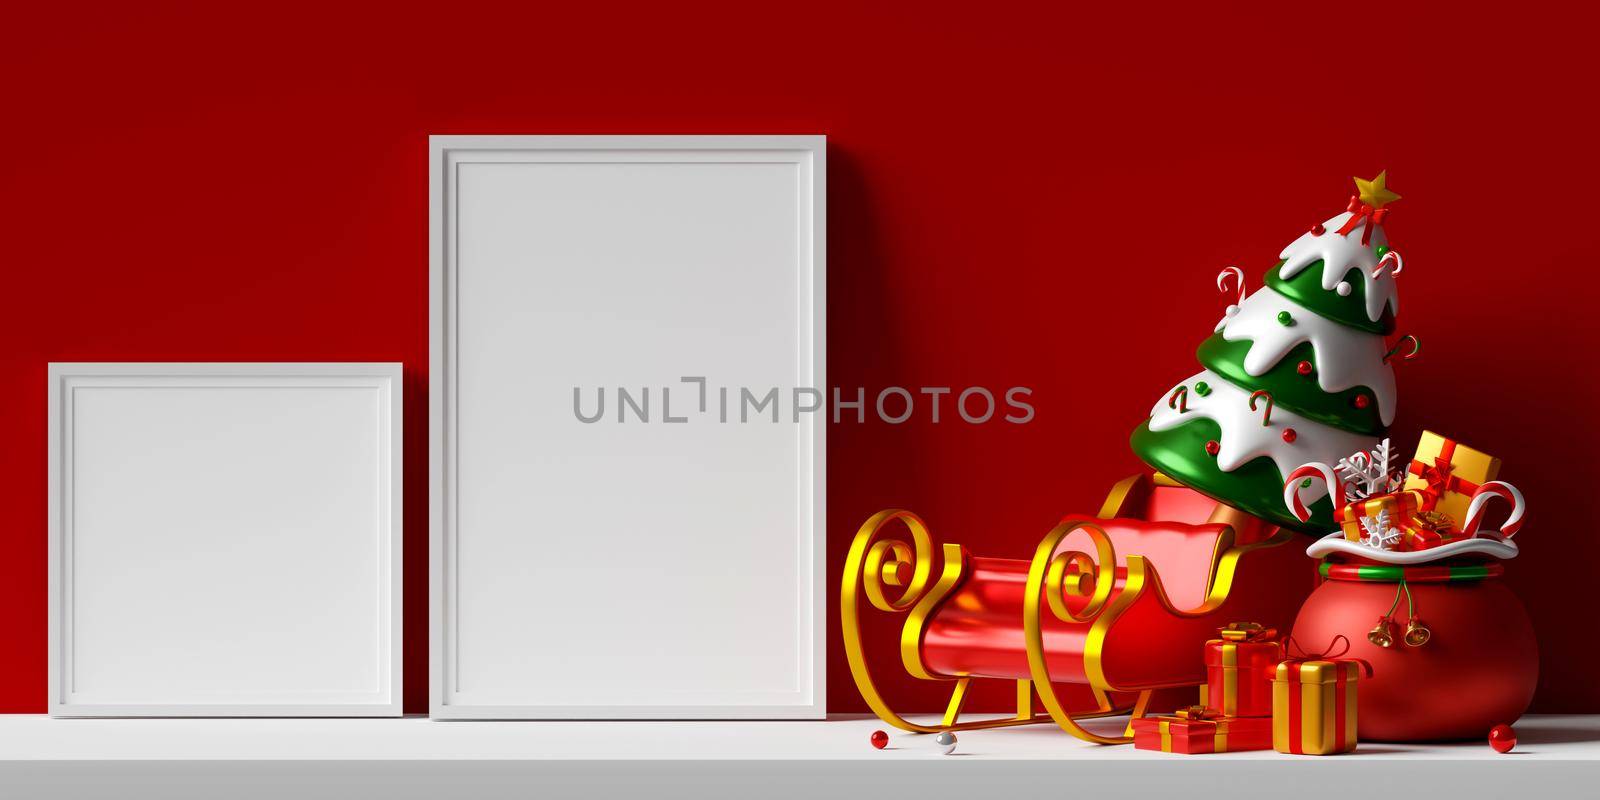 3d illustration of 2 photo frames mockup with sleigh and Christmas bag 